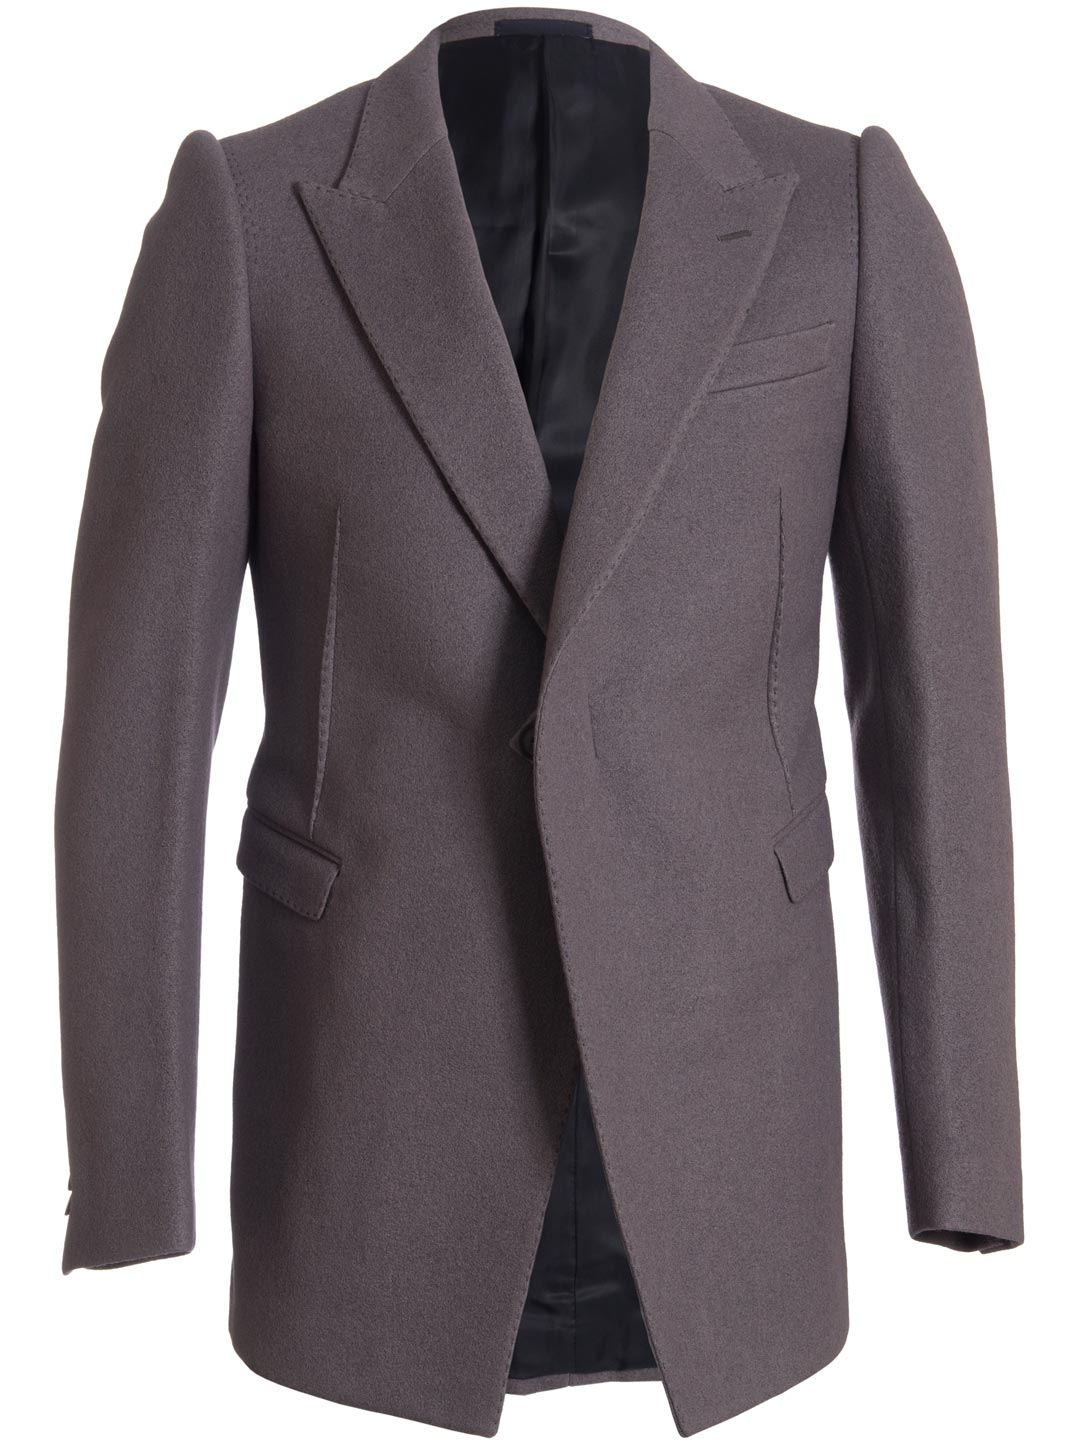 Lanvin Mens One Button Long Jacket in Lavender (Purple) for Men - Lyst